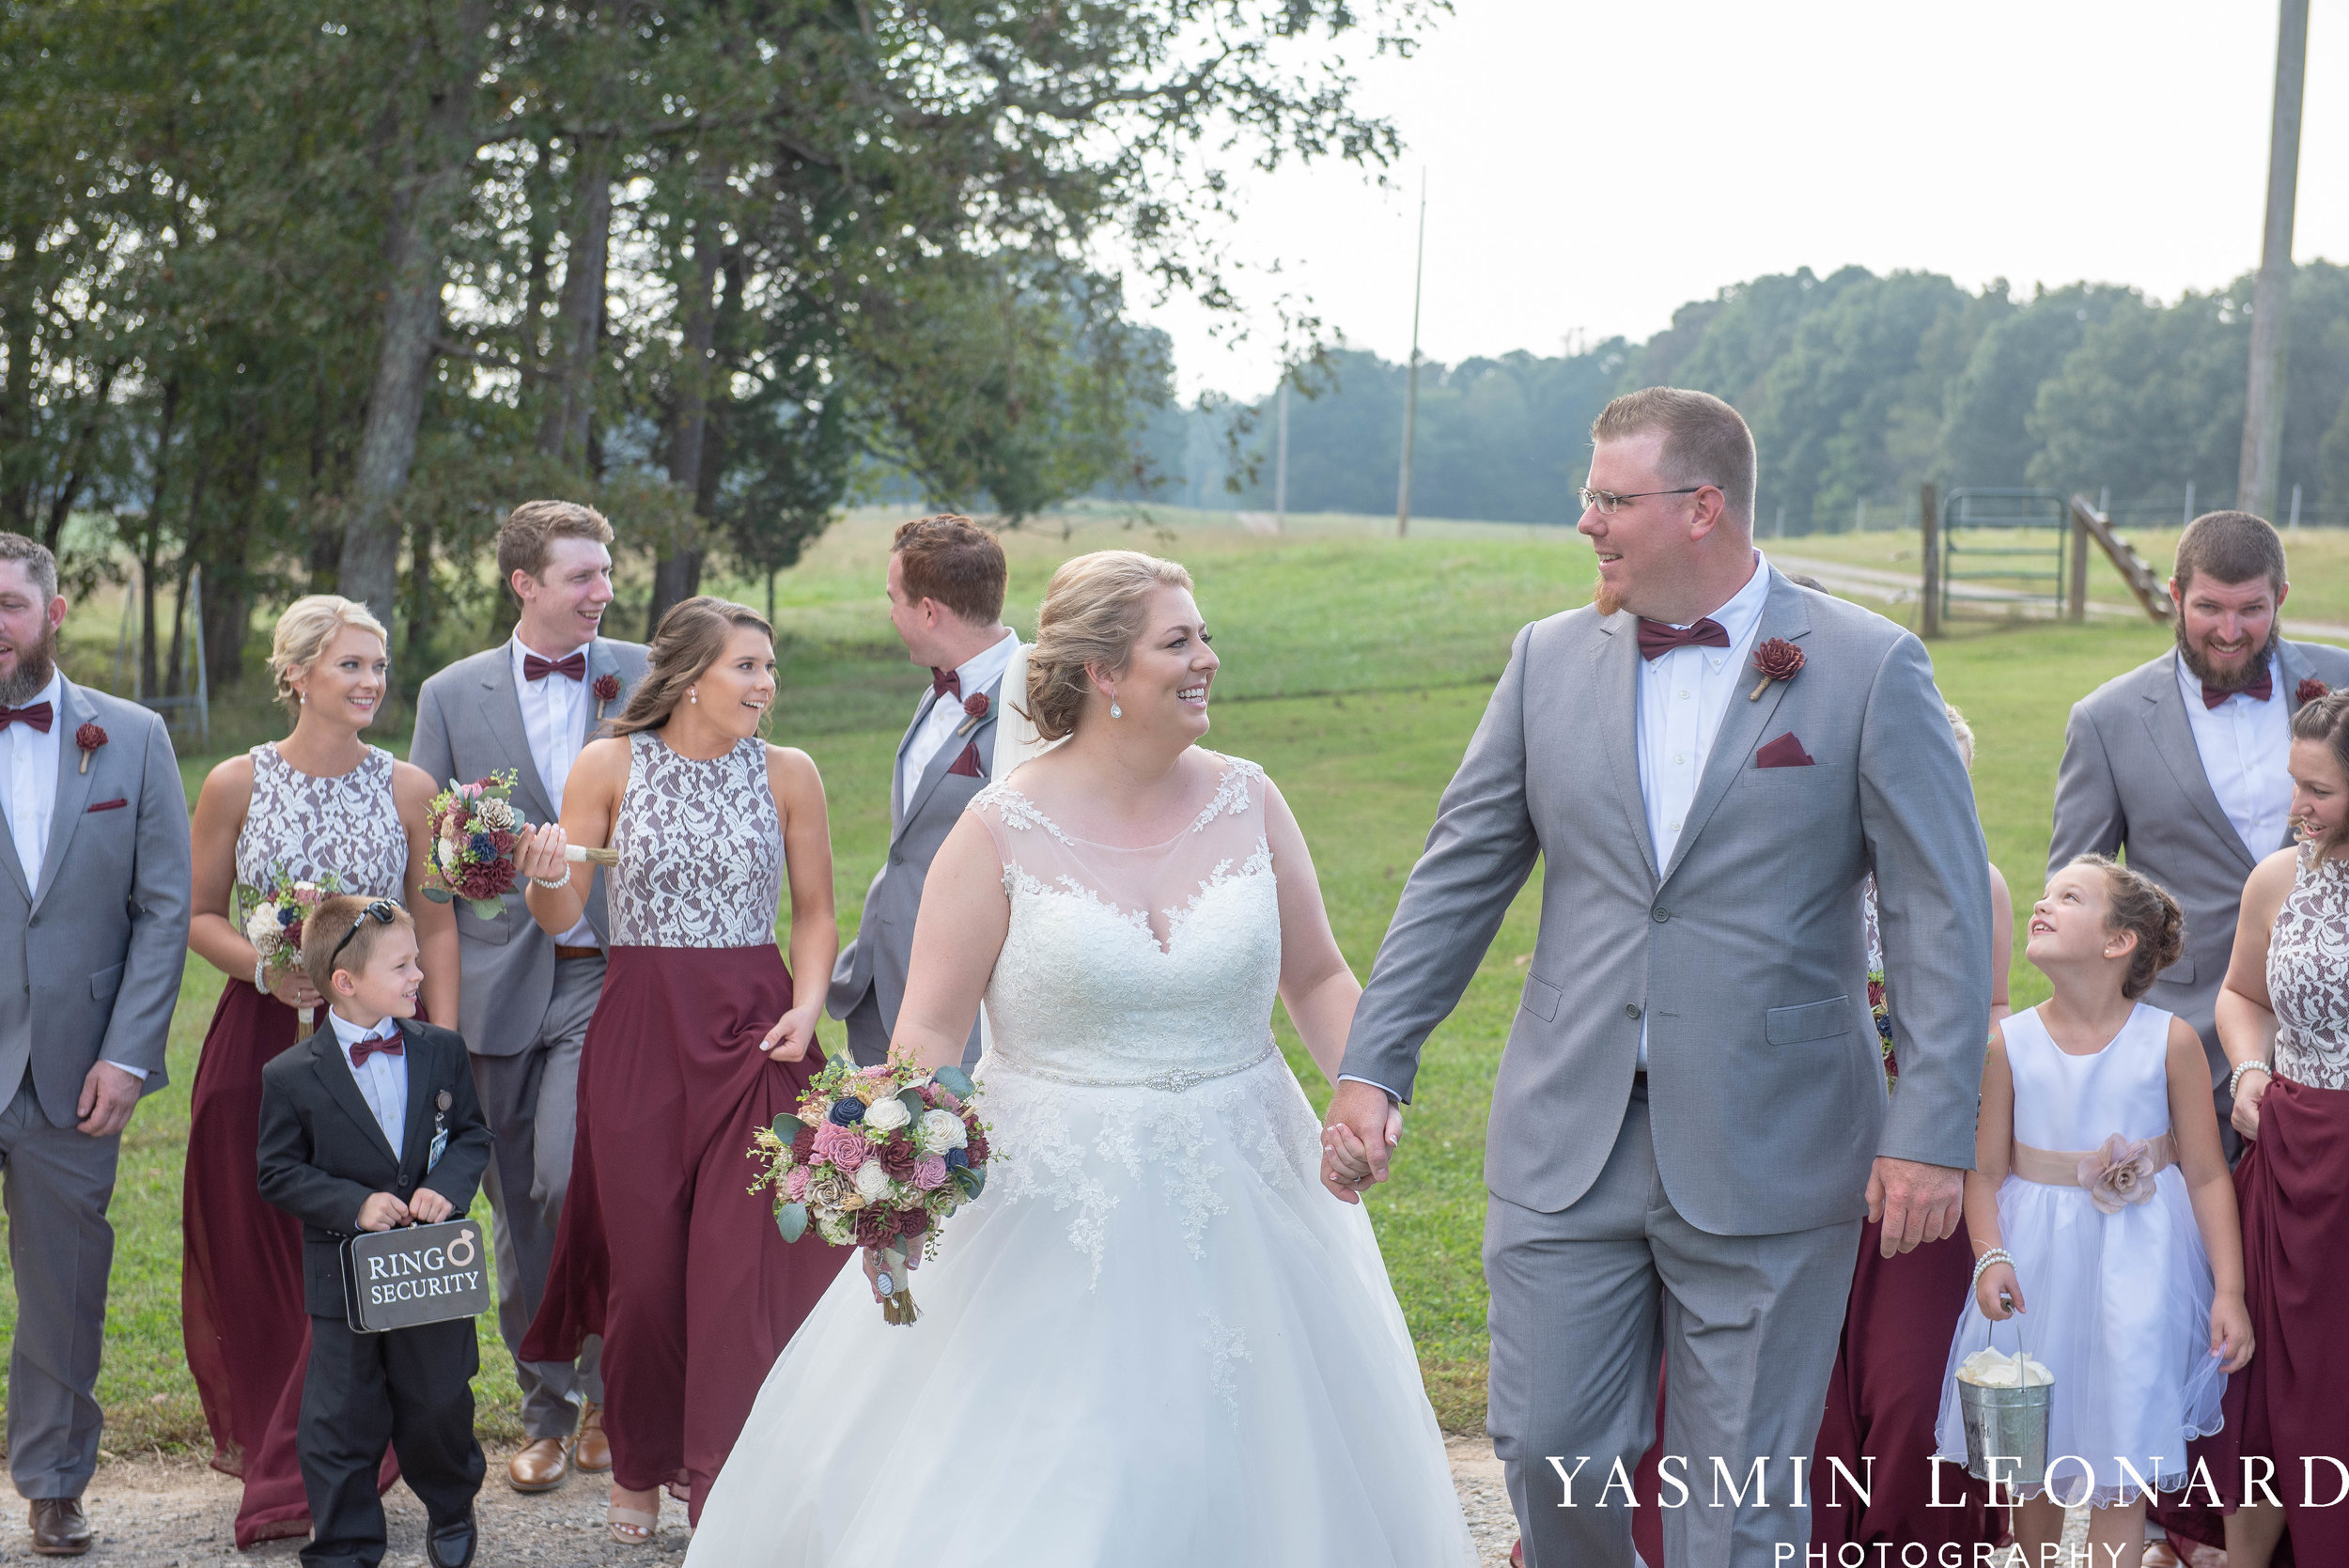 Danner Farms - NC Wedding Venues - NC Barns - Statesville NC - NC Wedding Photographer - High Point Wedding Photographer - Yasmin Leonard Photography-46.jpg